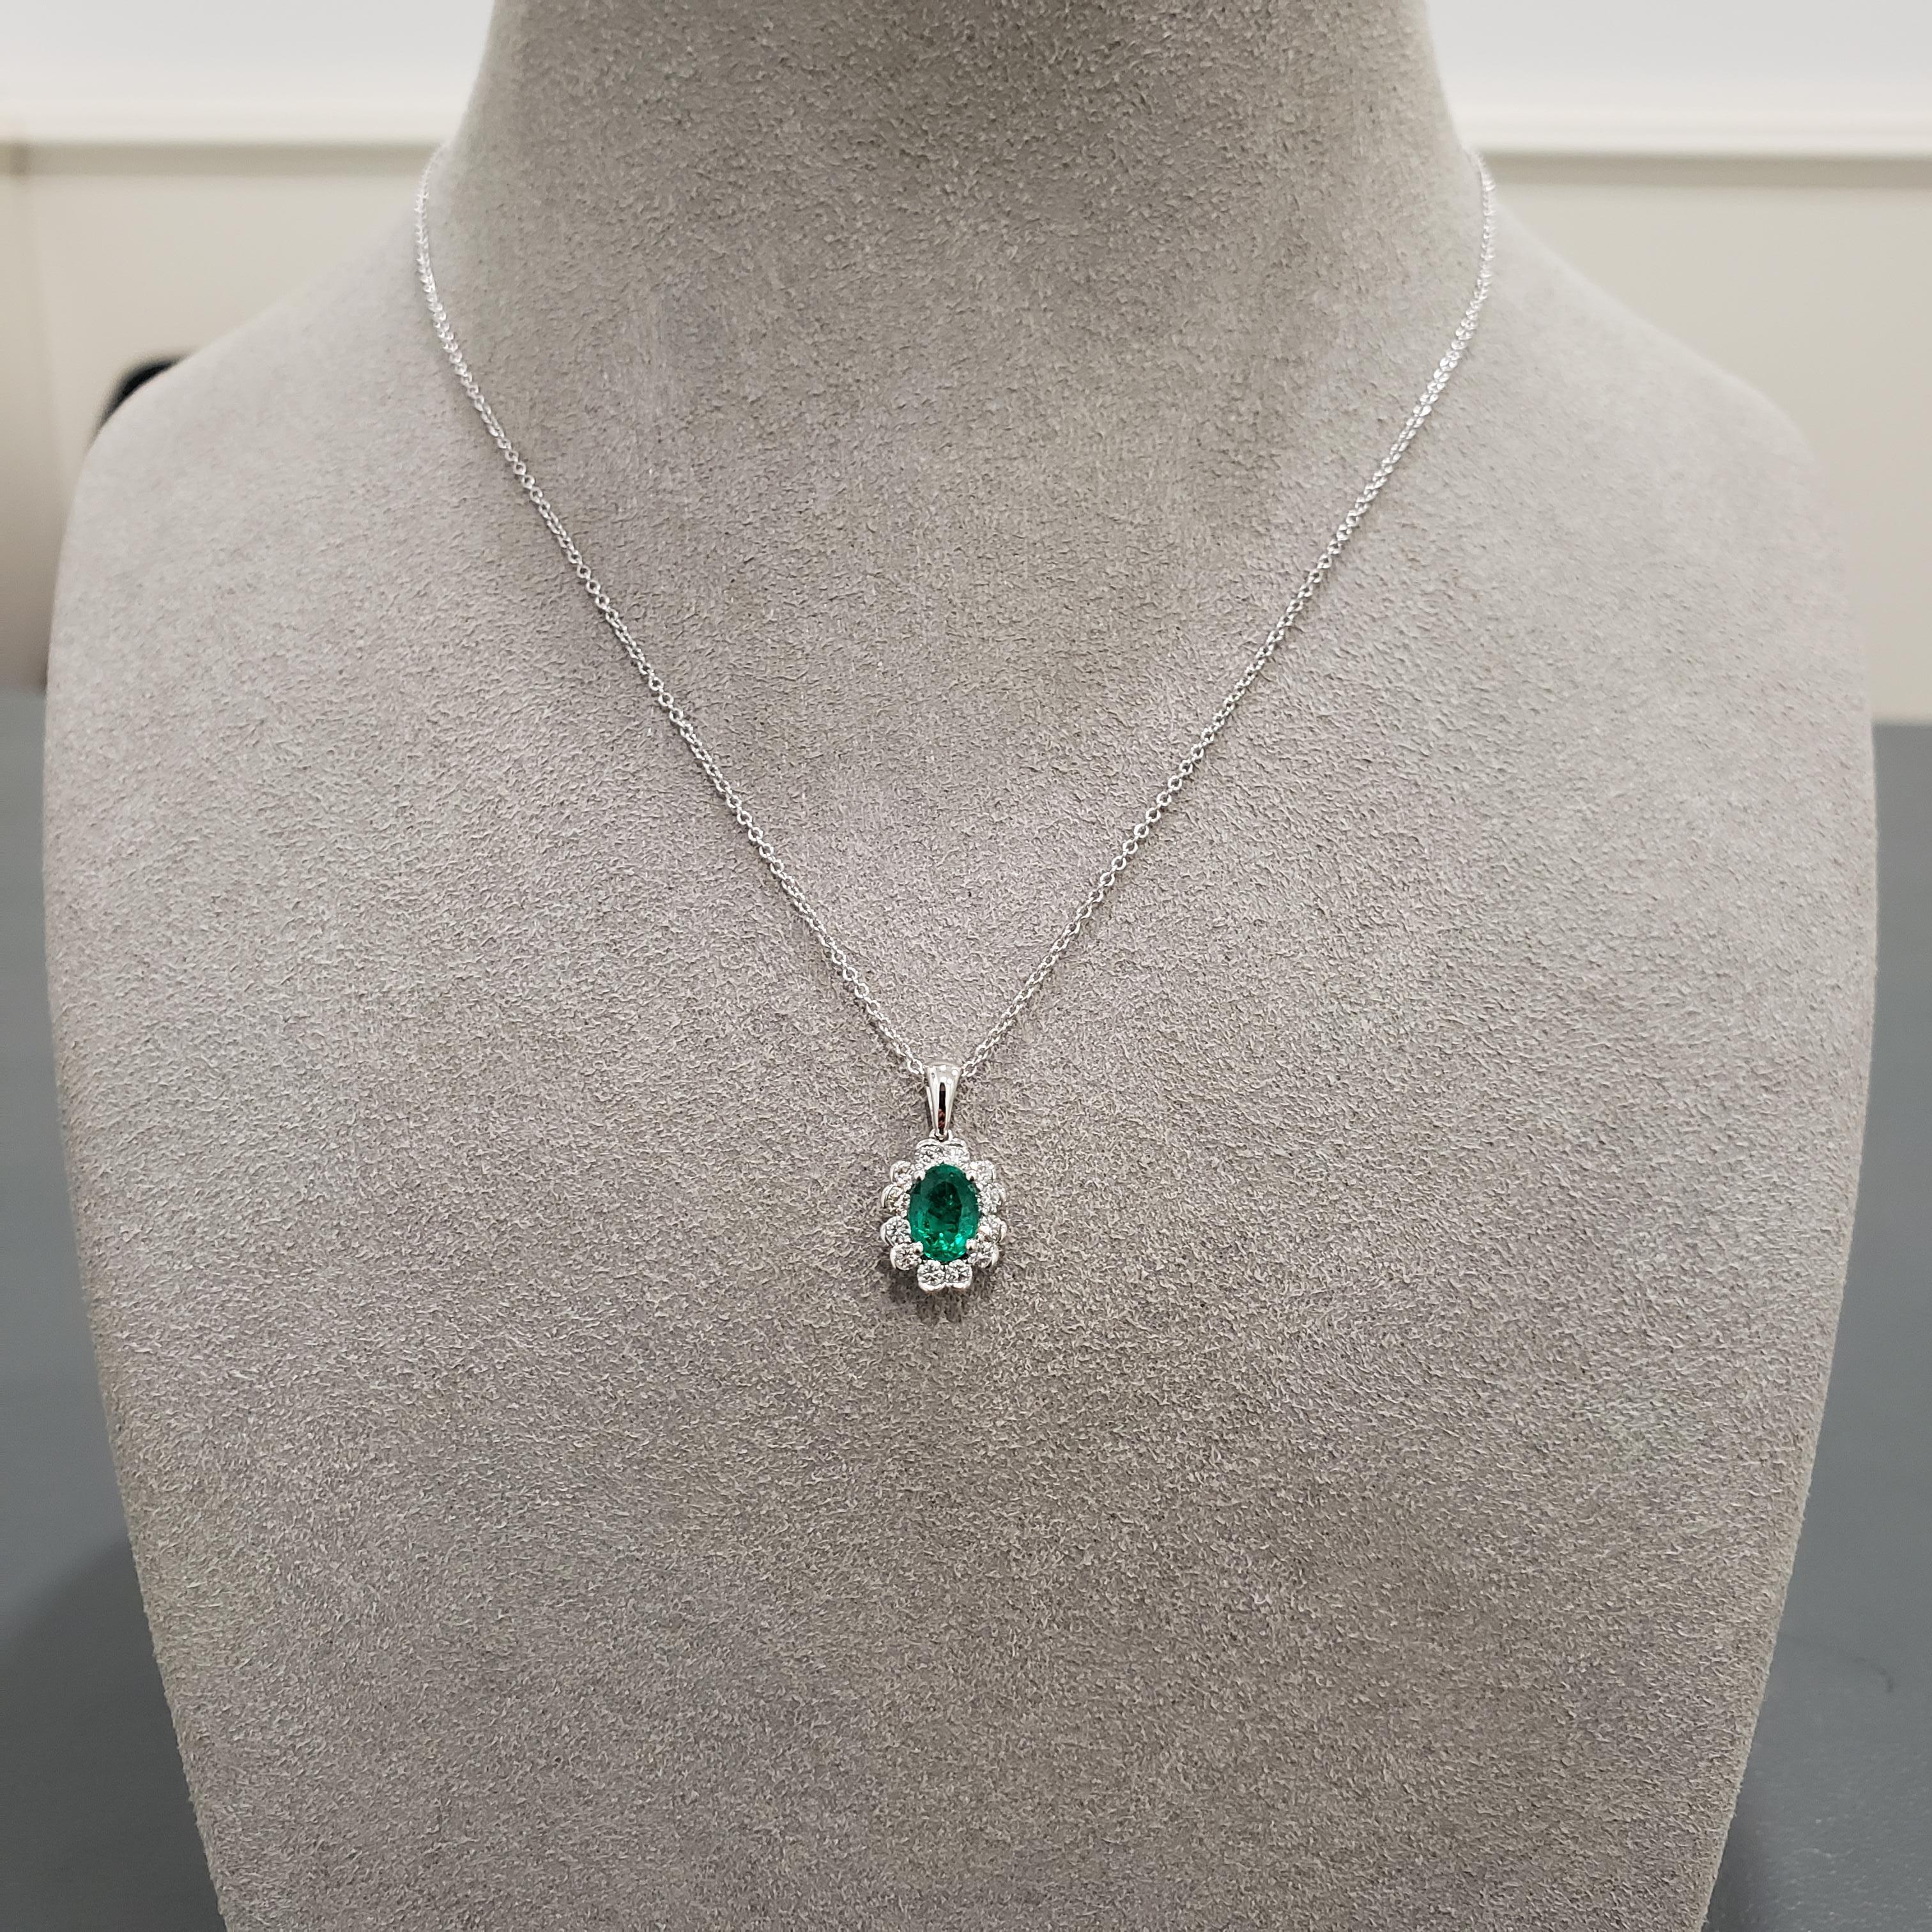 Contemporary Roman Malakov 0.71 Carat Oval Cut Green Emerald and Diamond Pendant Necklace For Sale